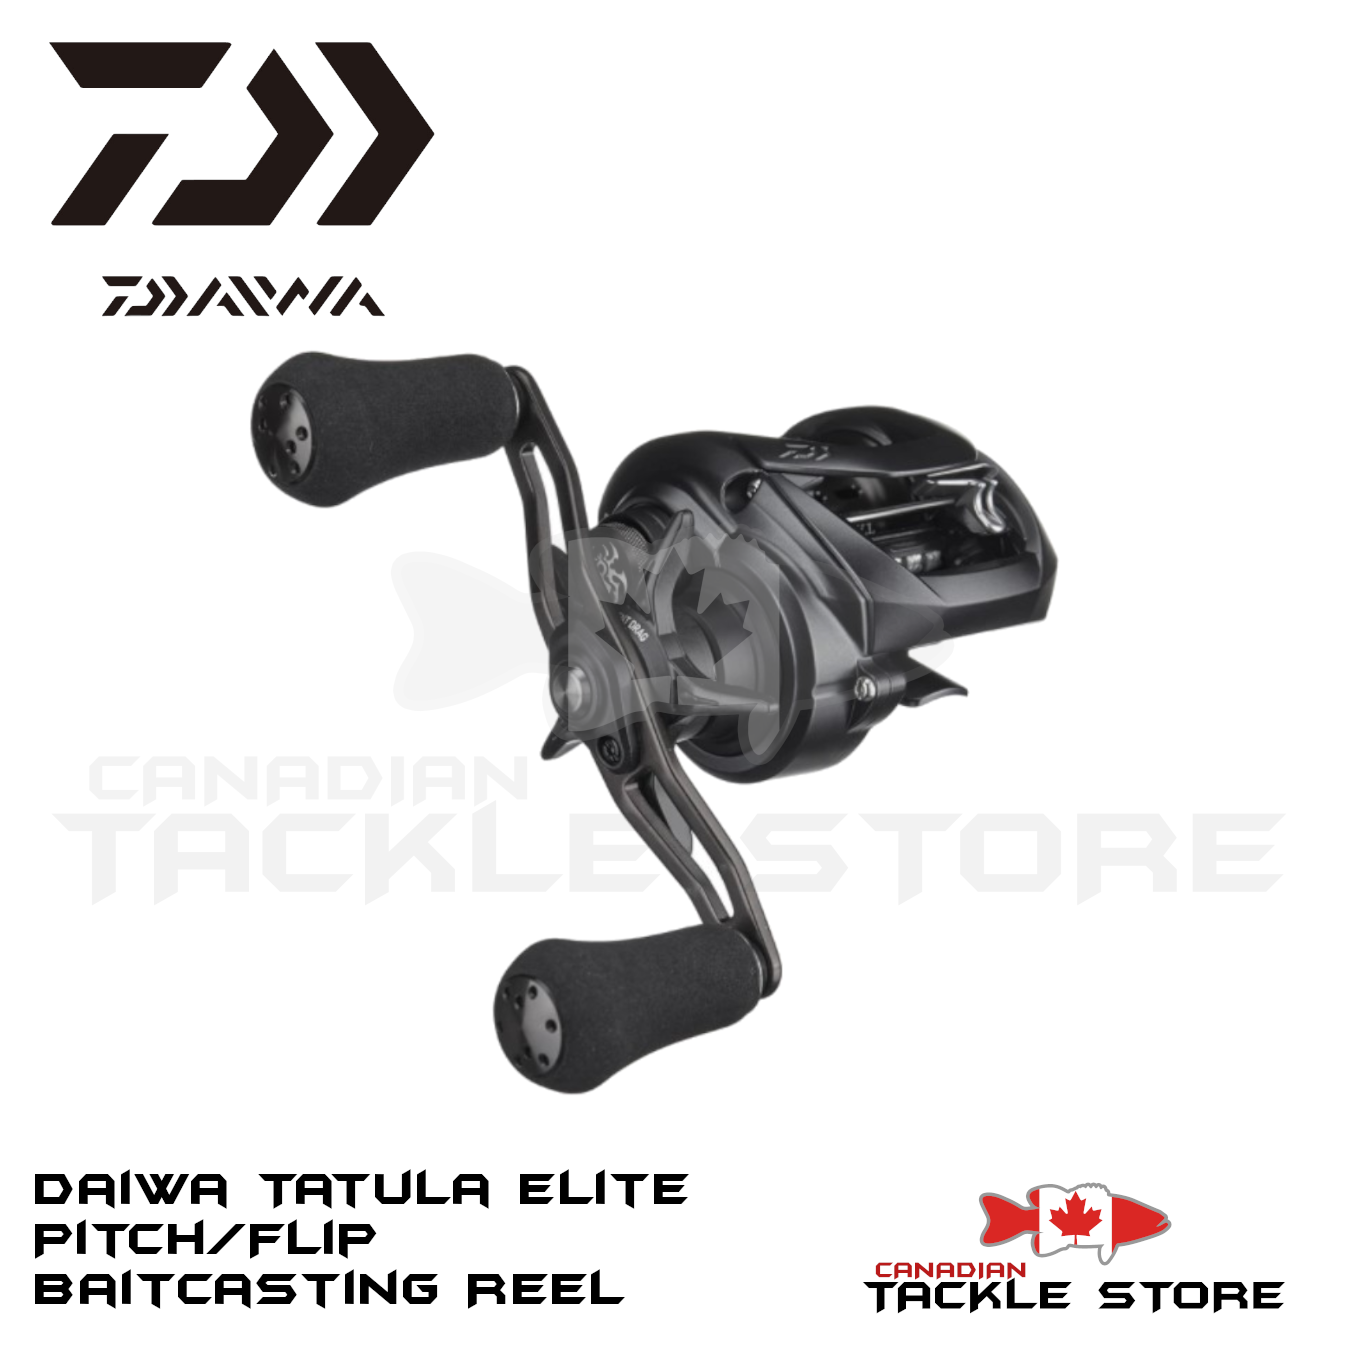 Daiwa Tatula Elite Pitch/Flip Baitcast Reel – Canadian Tackle Store